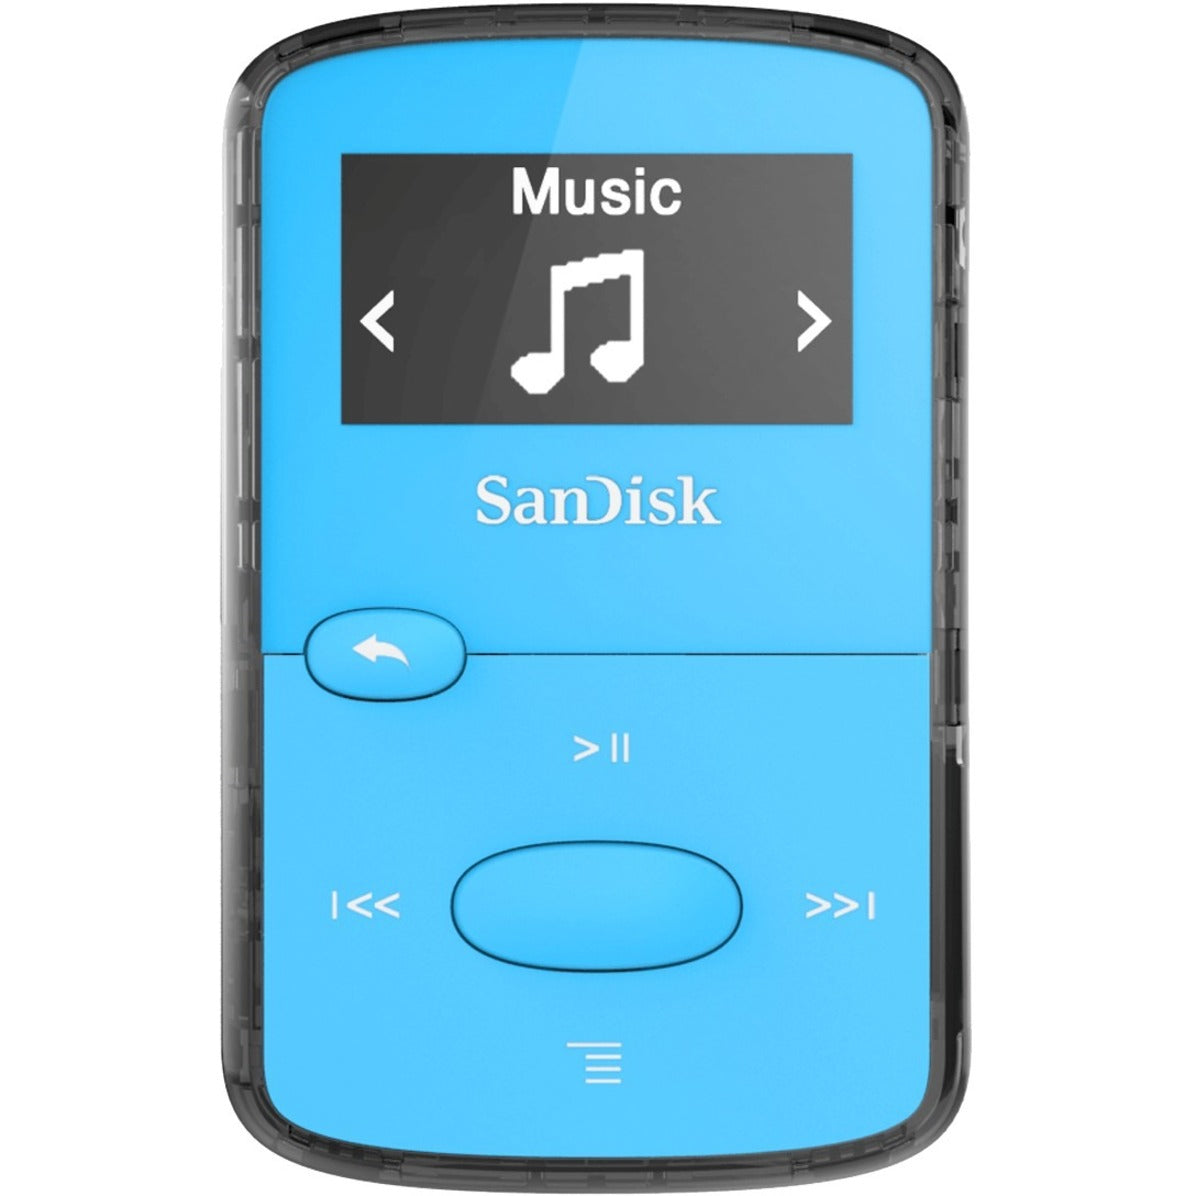 SanDisk SDMX26-008G-G46B Clip JAM 8GB Flash MP3 Player, Blue - FM Tuner, 2 Year Warranty